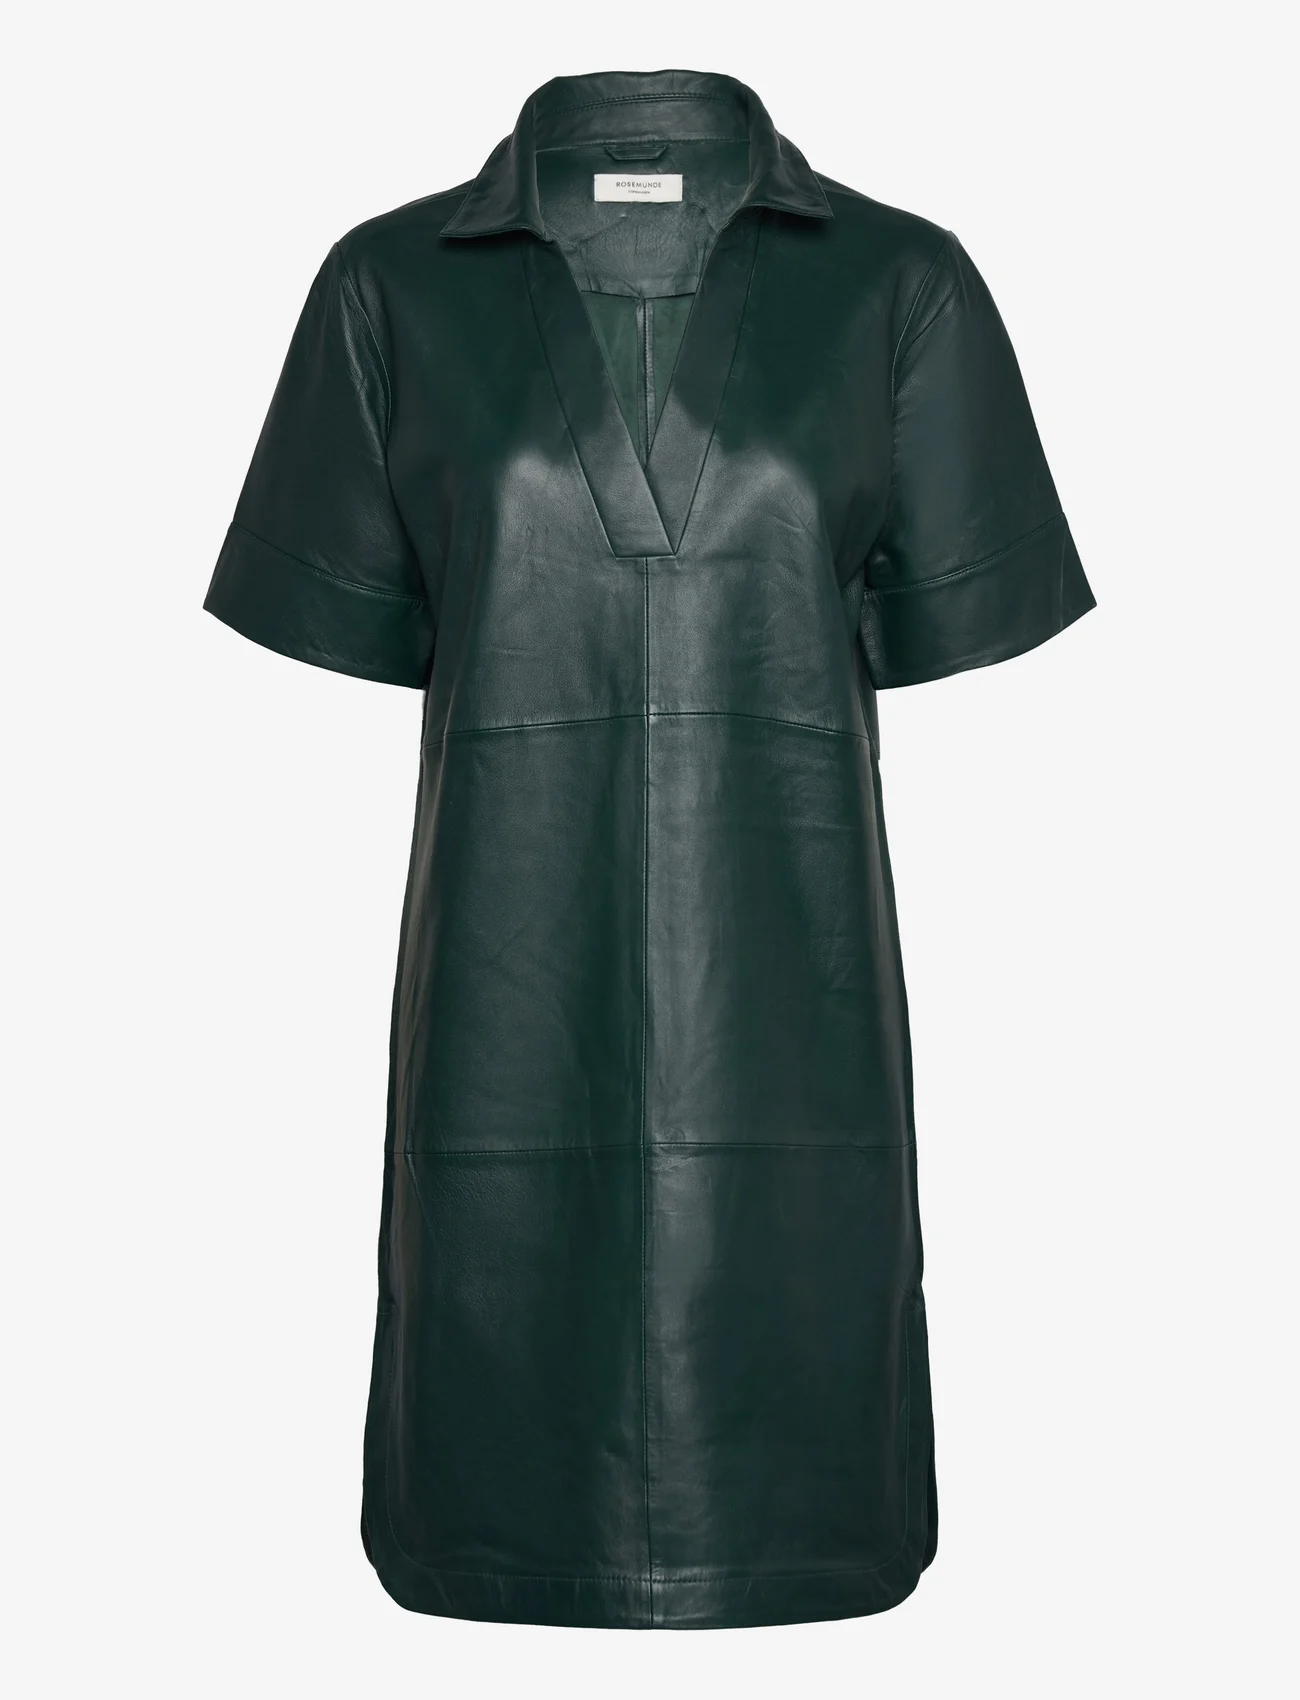 Rosemunde - Leather dress - t-shirt-kleider - dark teal - 0